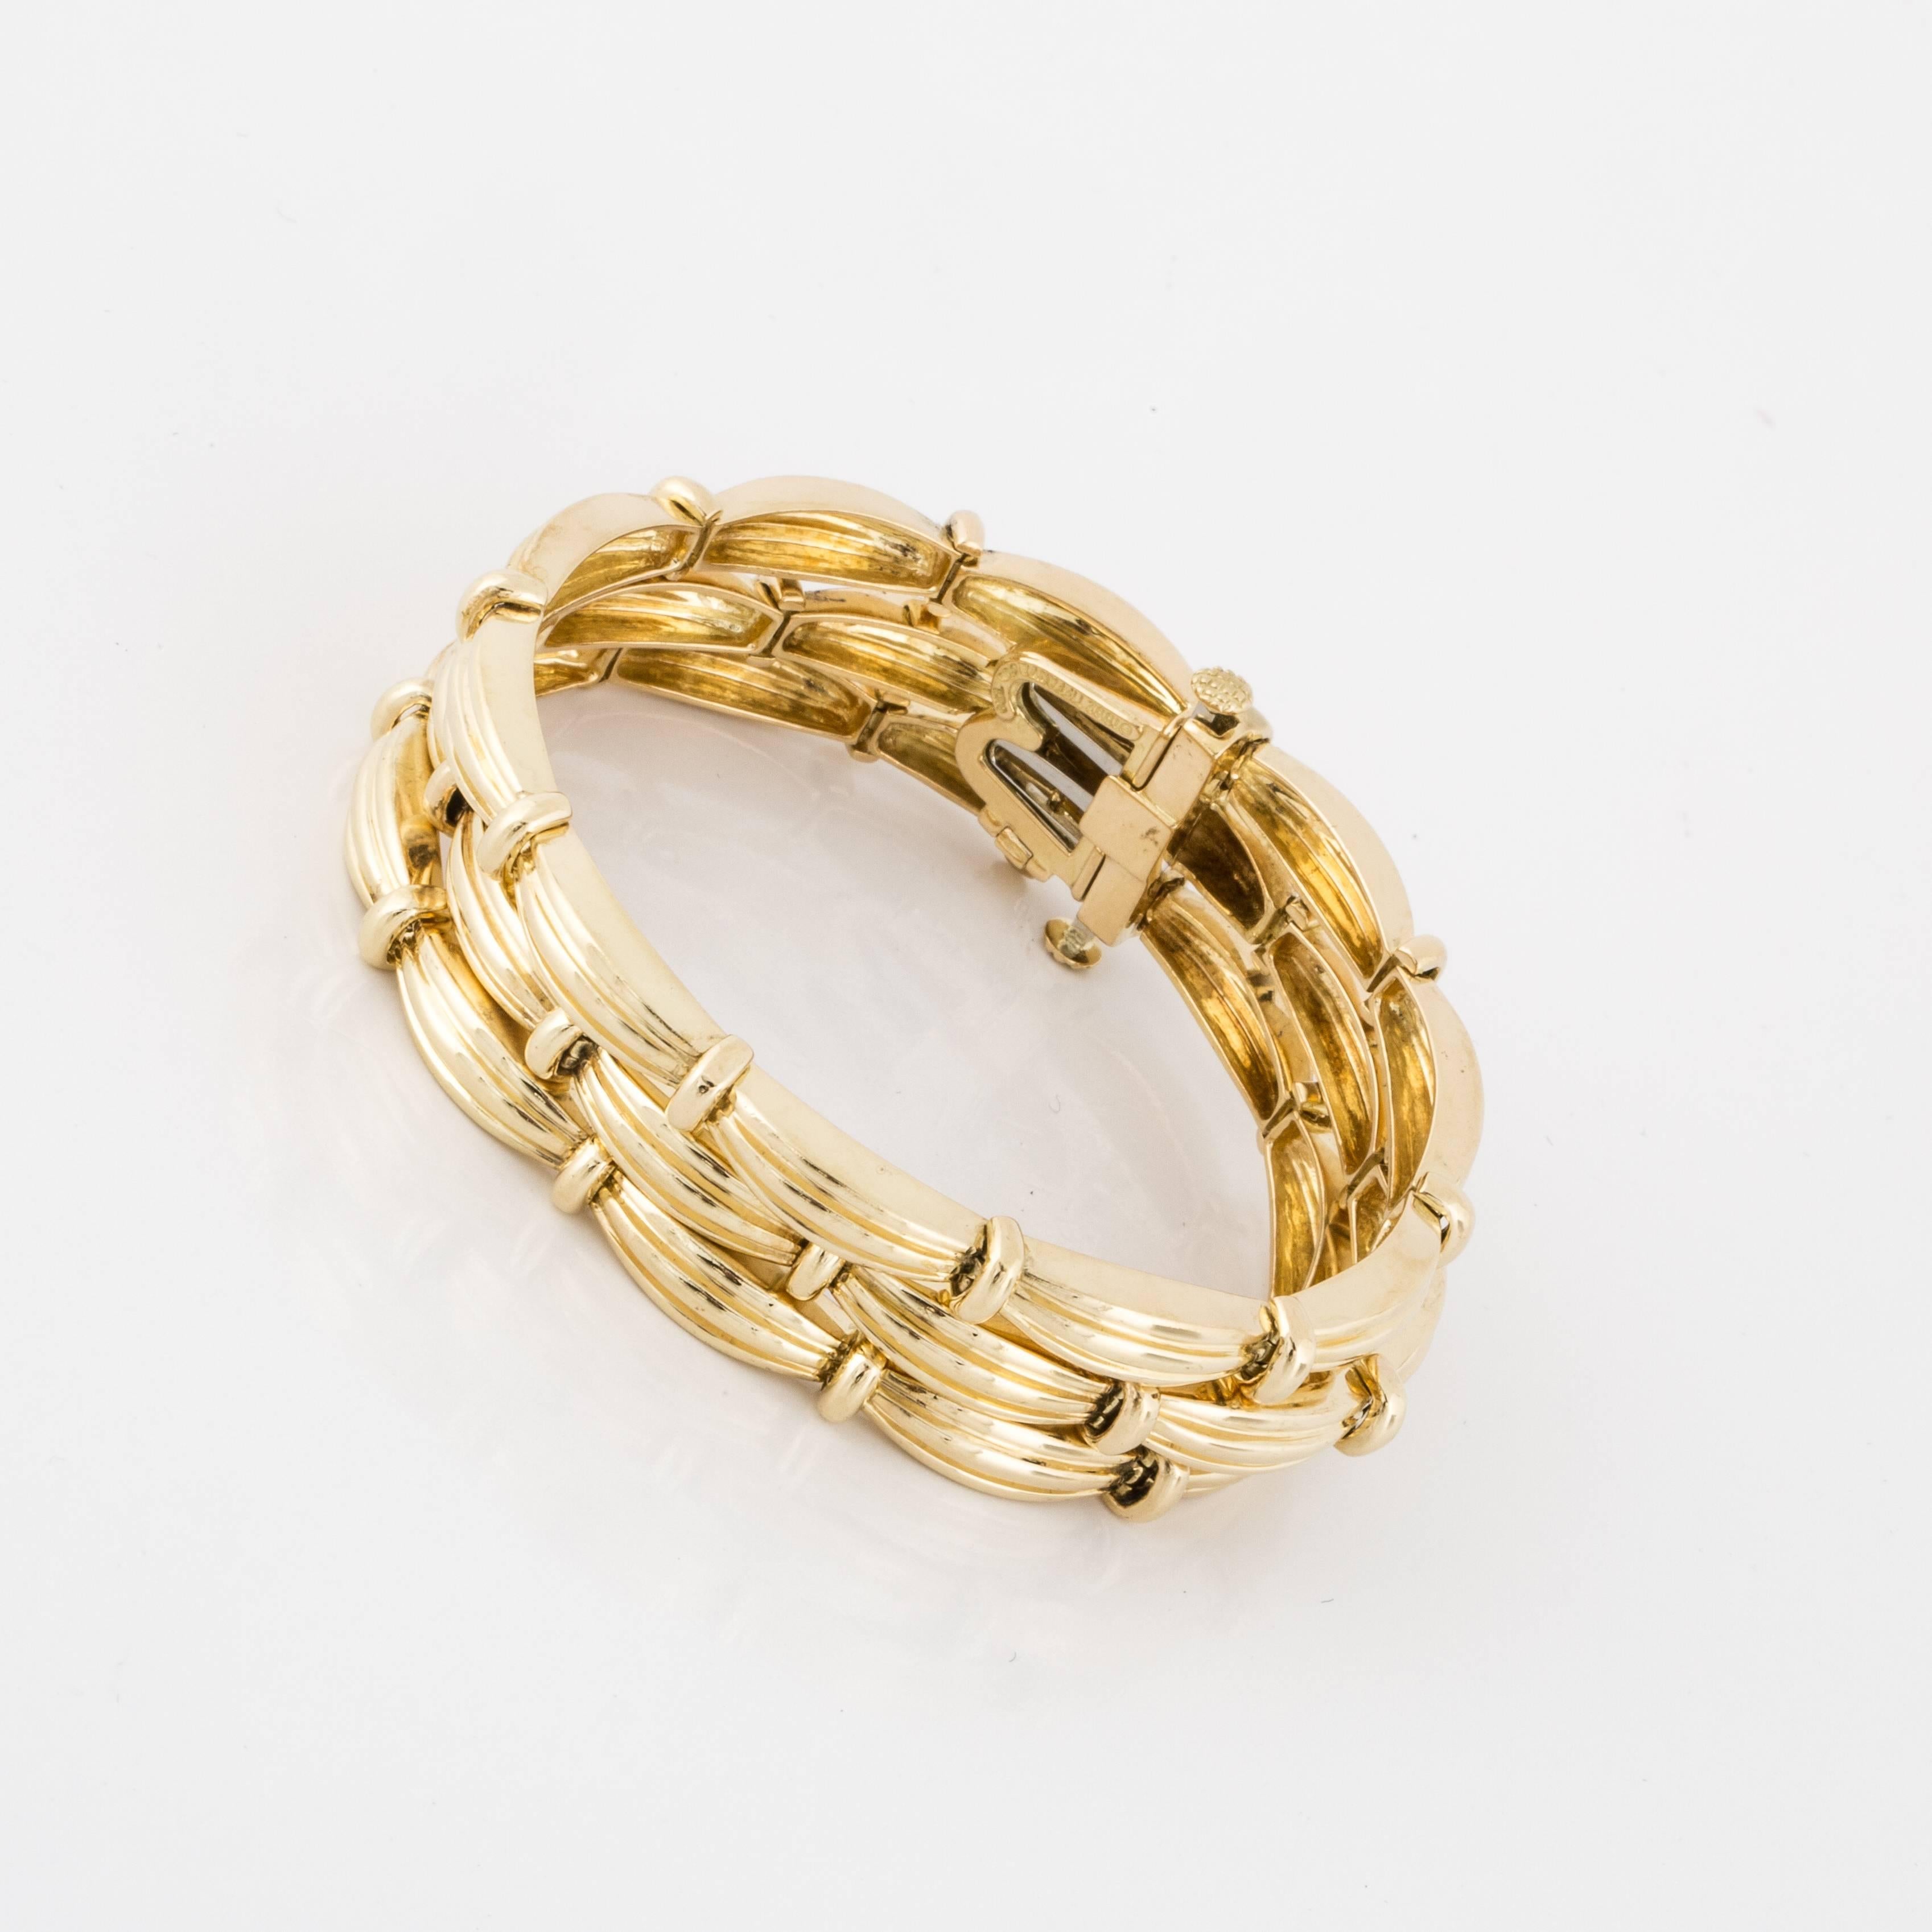 Tiffany & Co. triple strand bracelet in 18K yellow gold.  Marked 